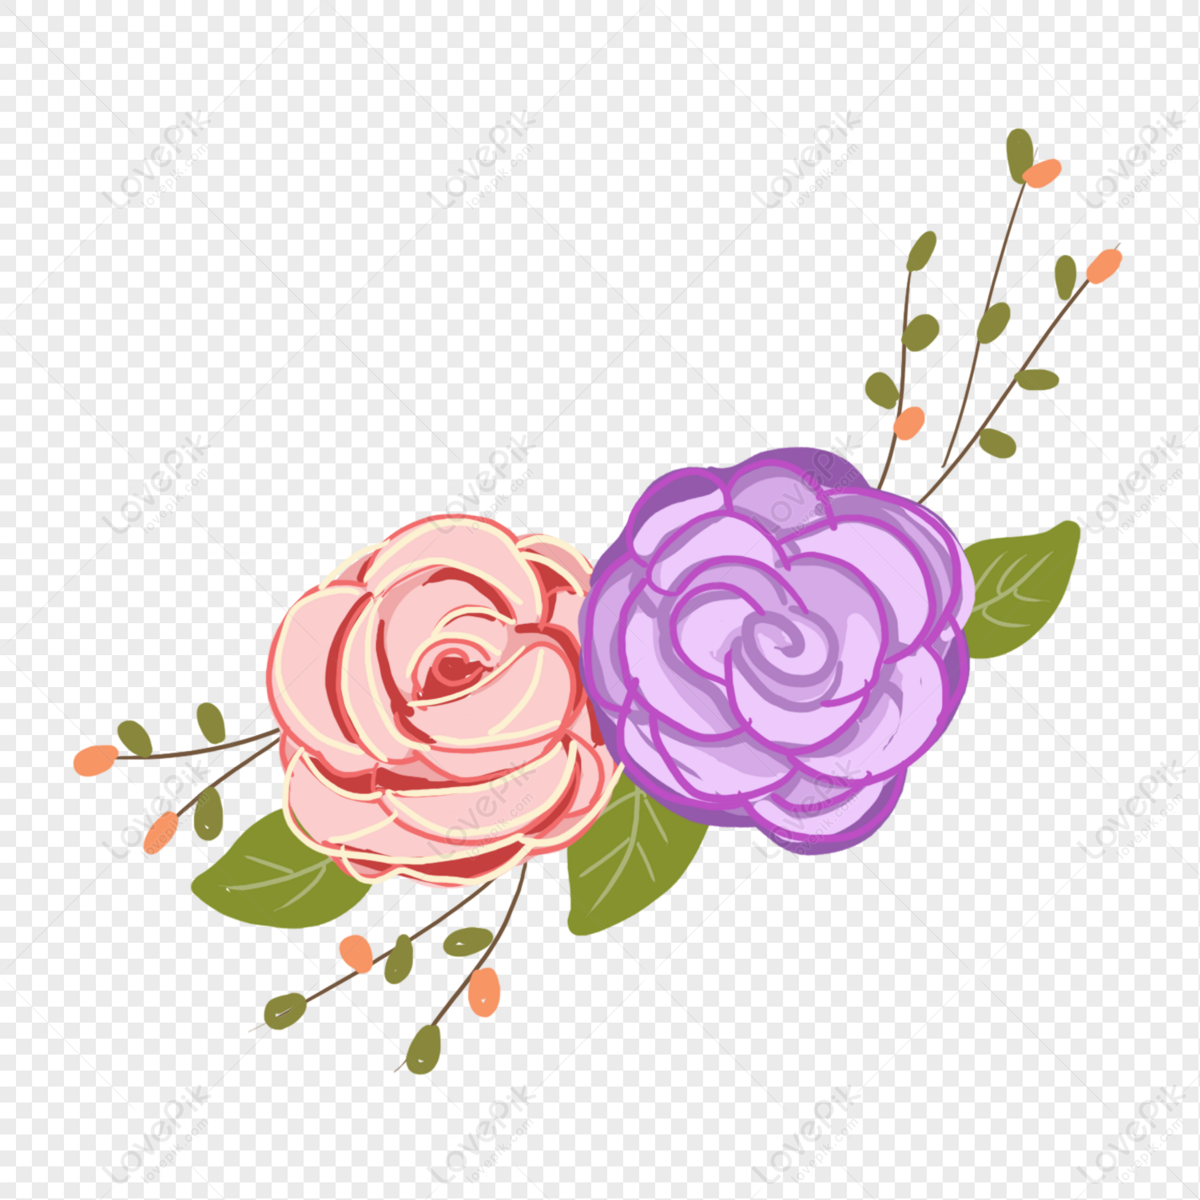 Flores Rosas Coloridas PNG Imagens Gratuitas Para Download - Lovepik